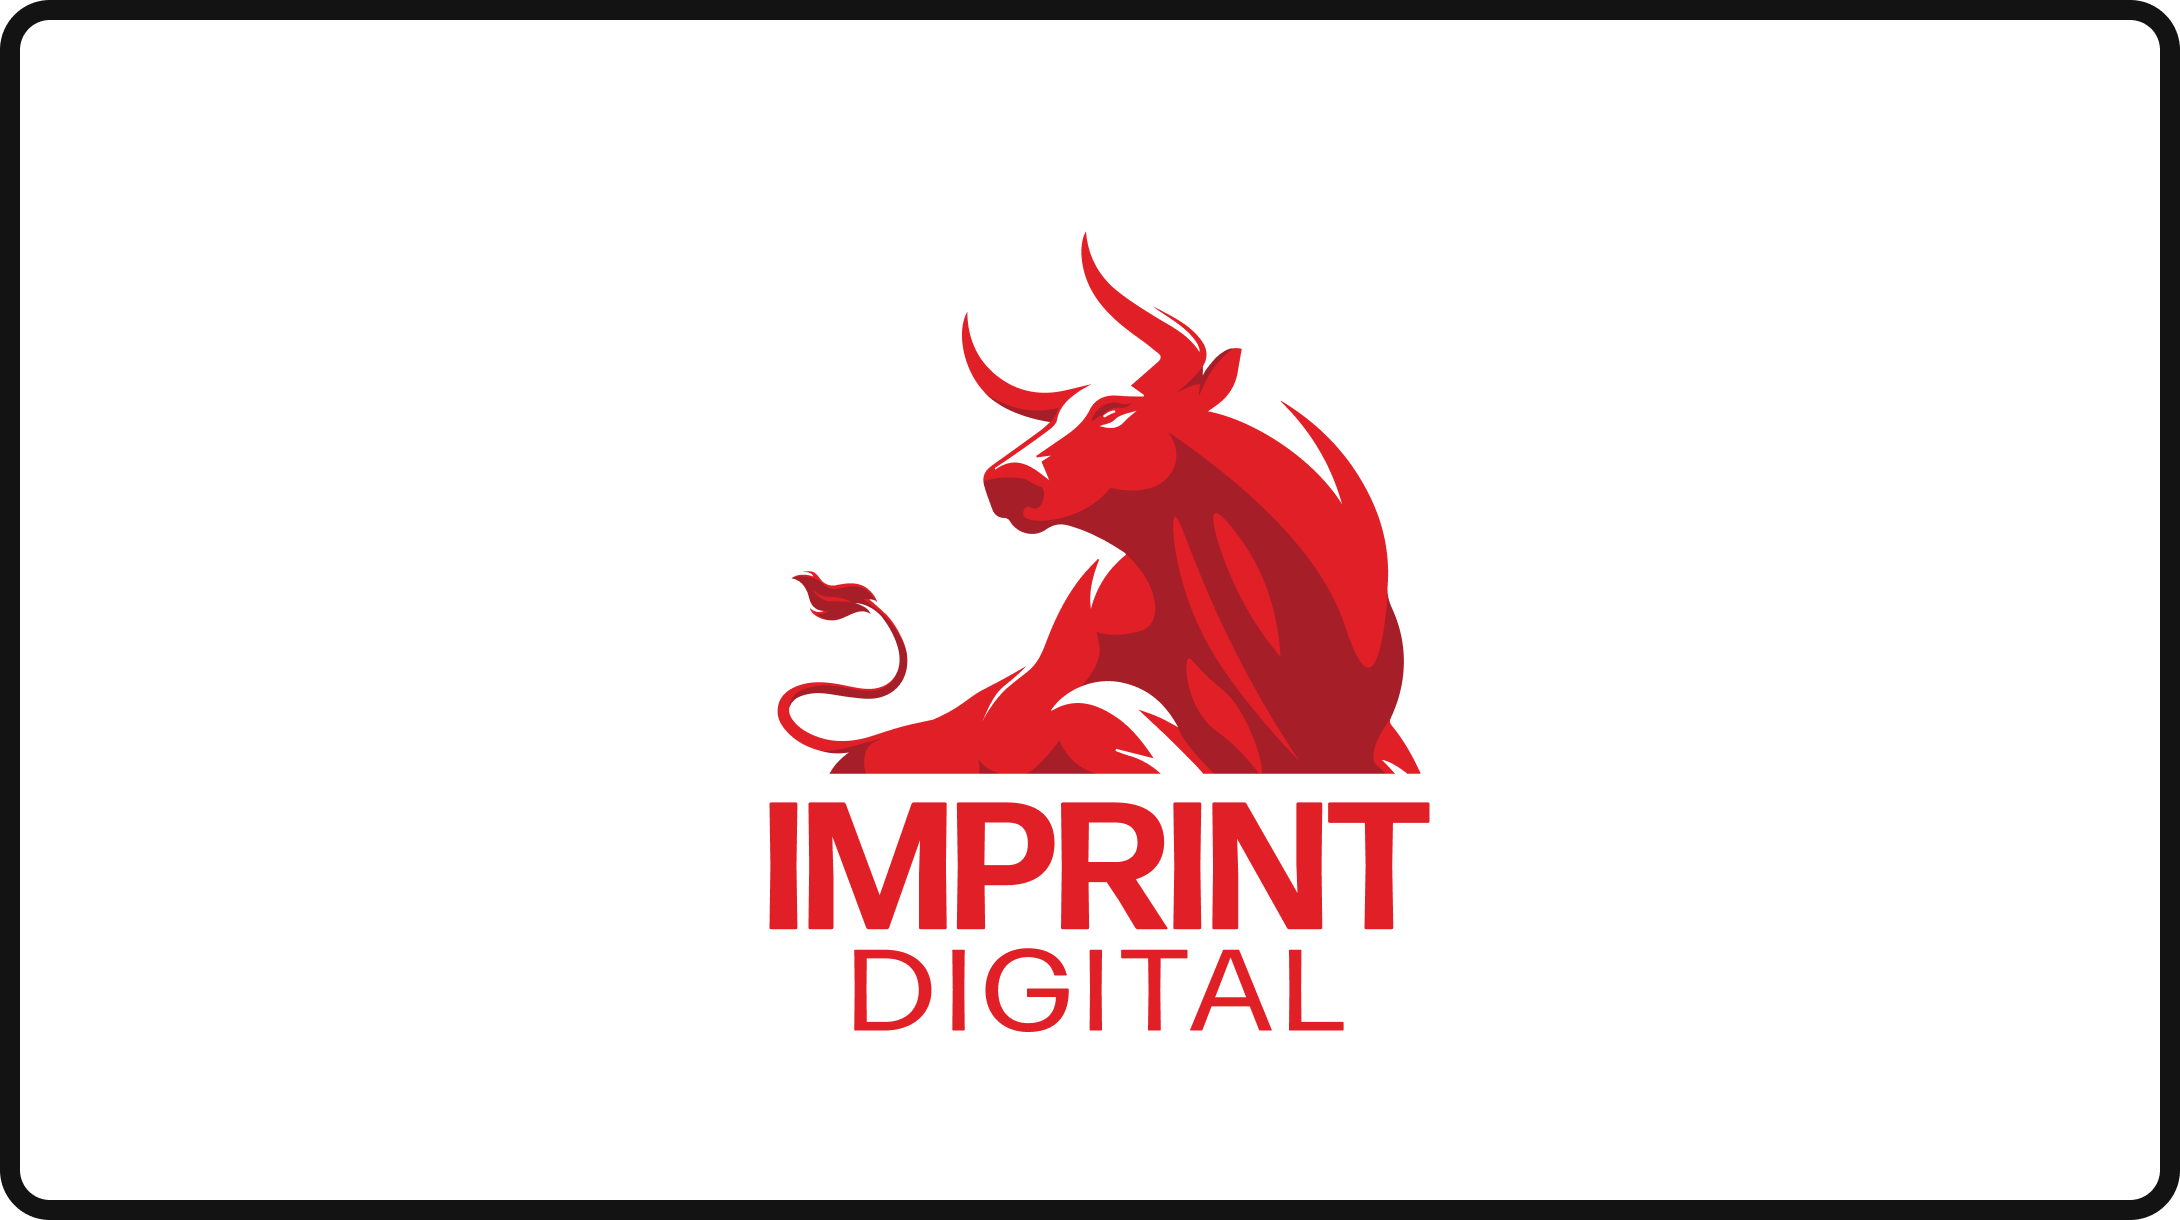 Imprint digital